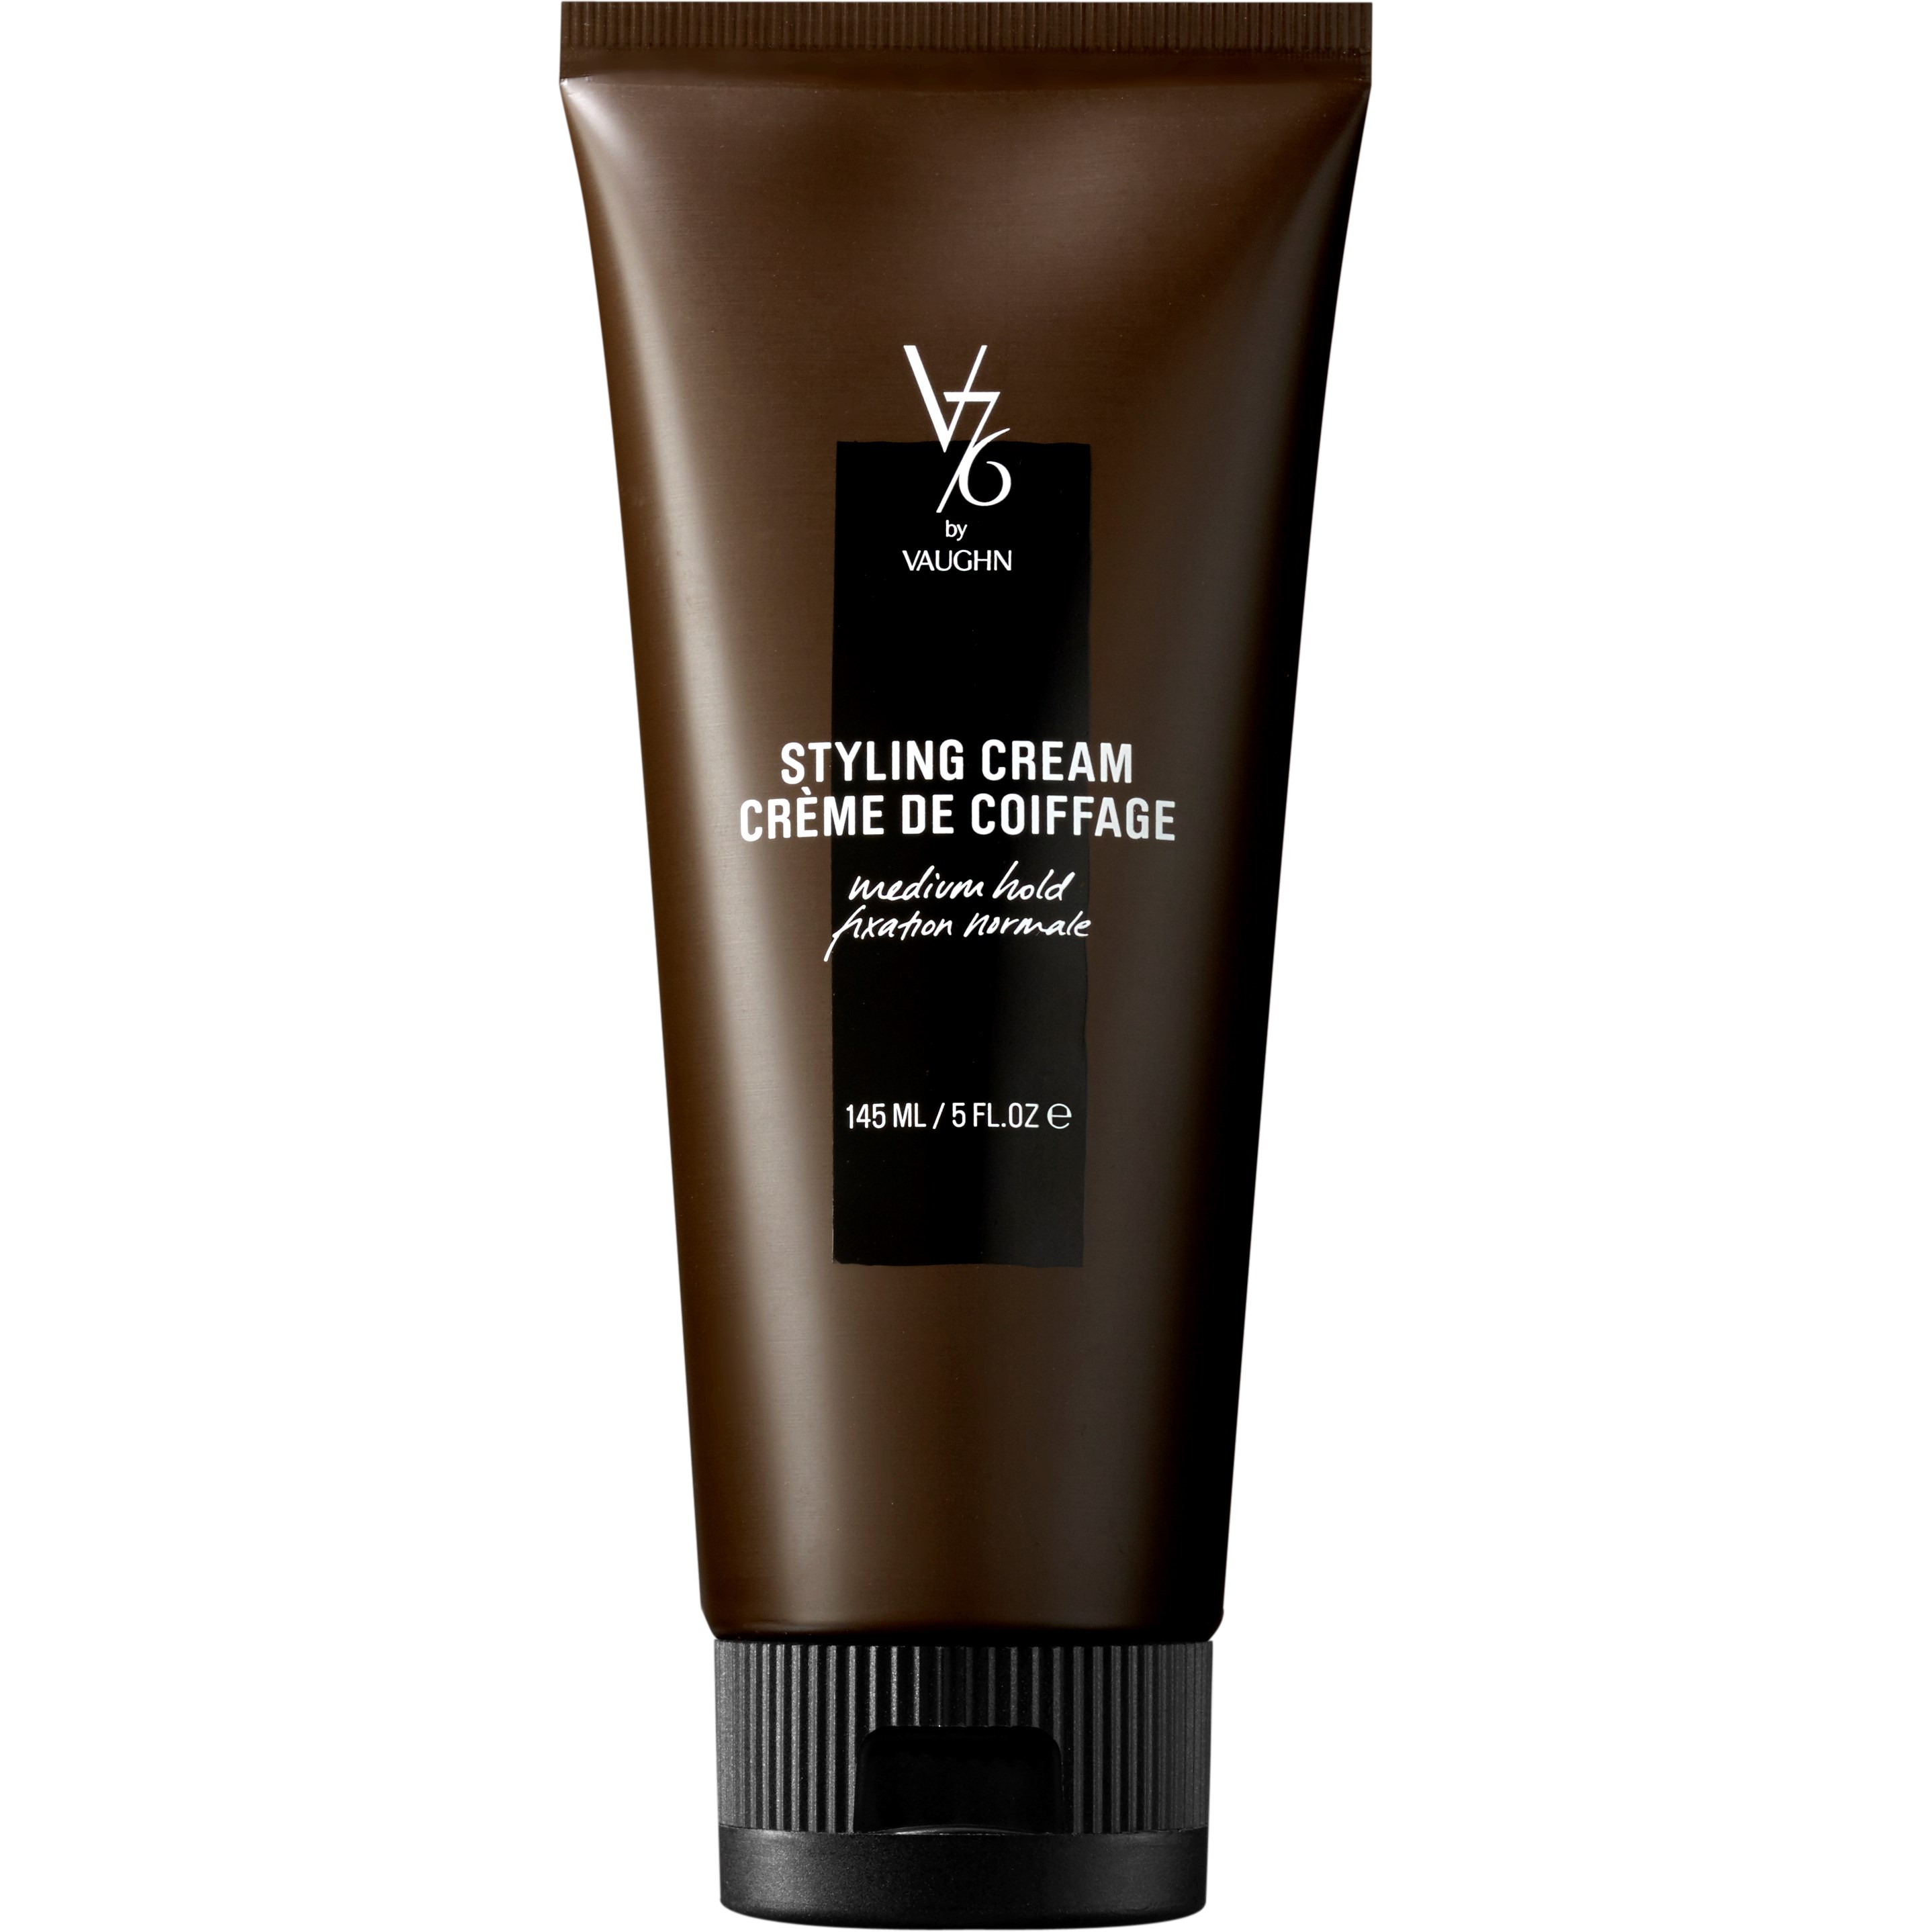 V76 by Vaughn Styling Cream 145 ml